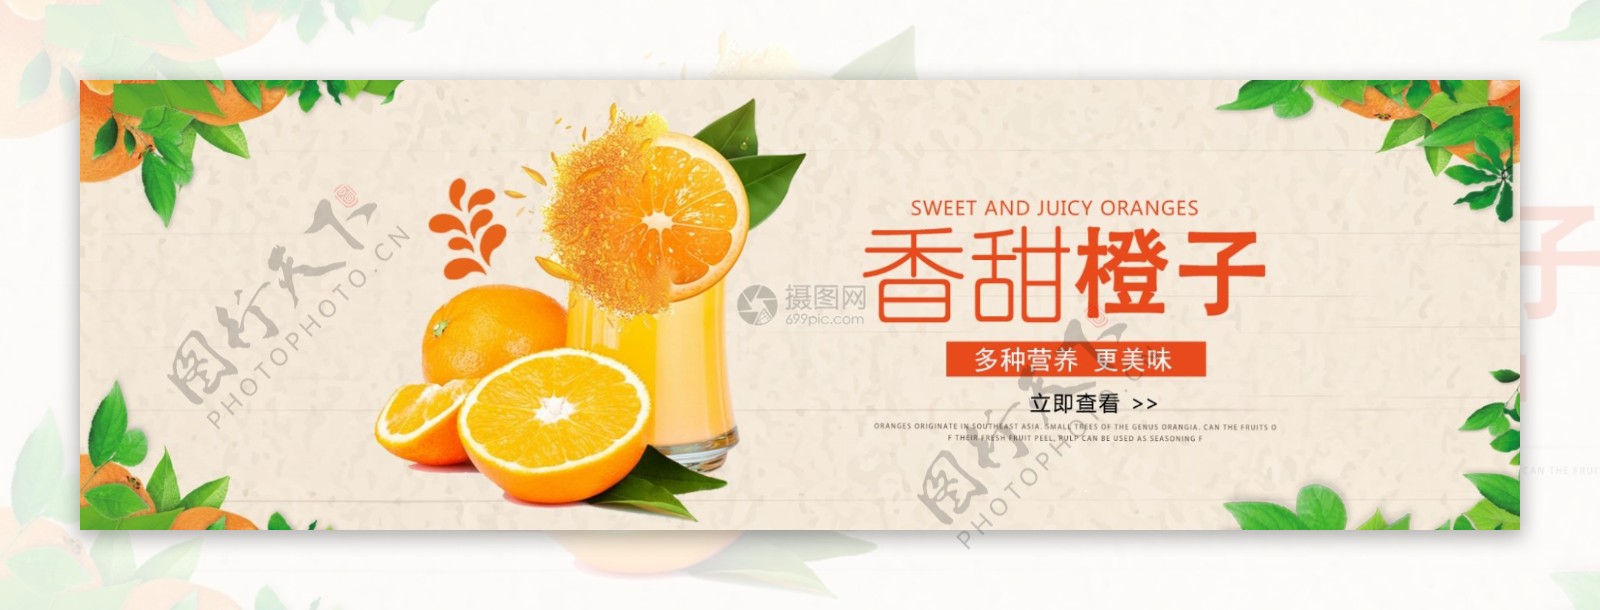 香甜橙子淘宝banner